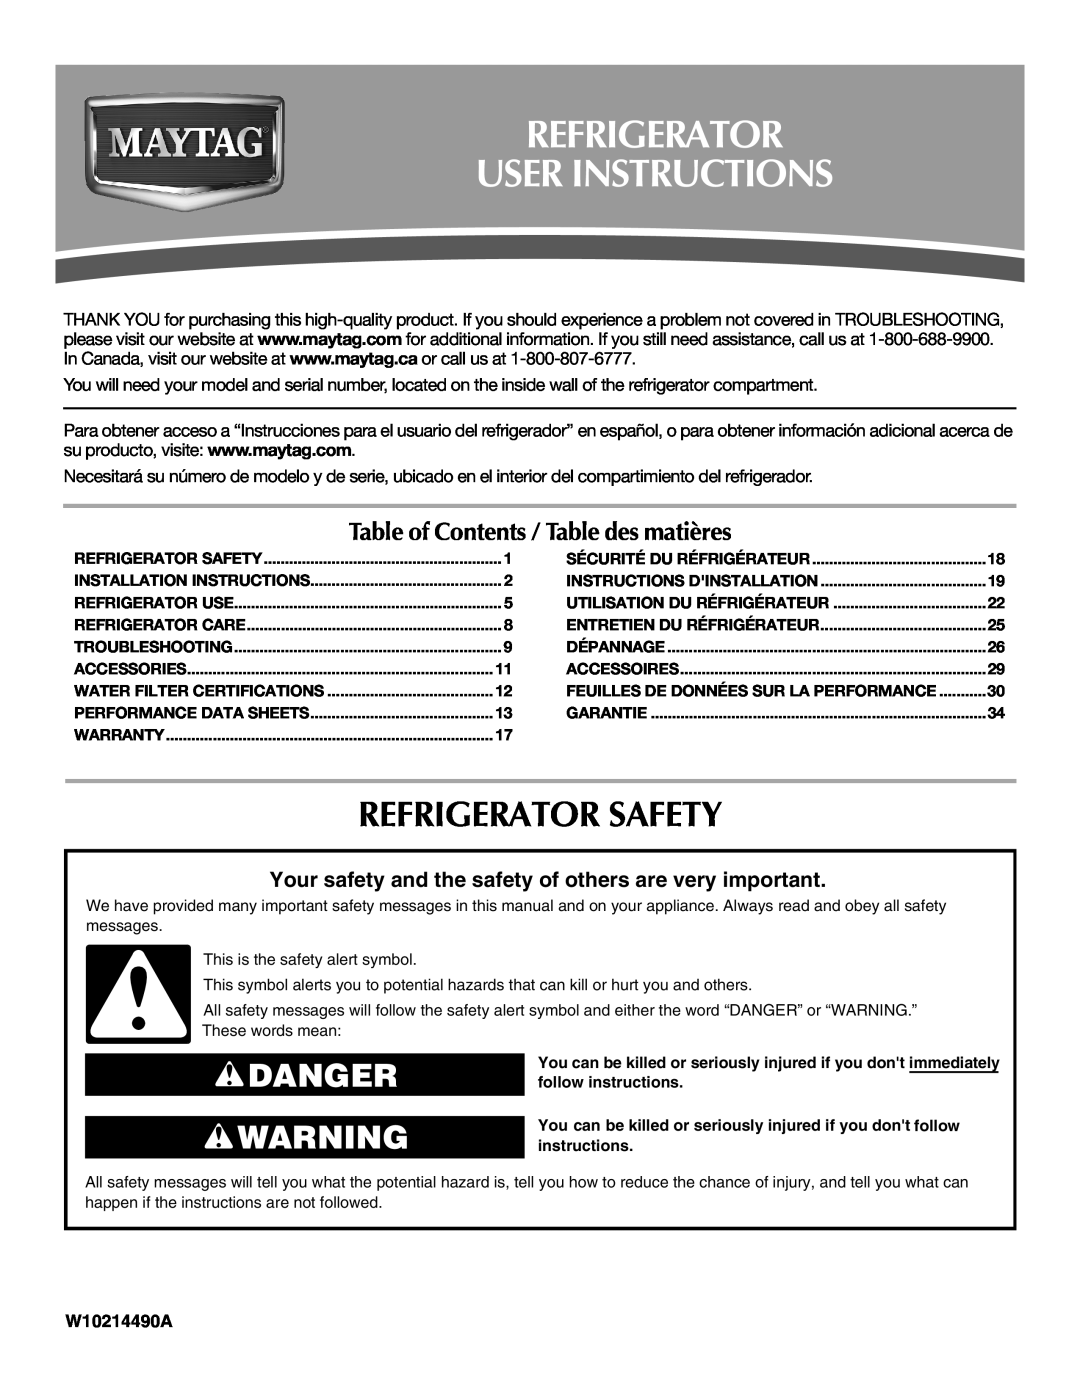 Maytag MSD2272VES installation instructions Refrigerator User Instructions, Refrigerator Safety, Danger, W10214490A 